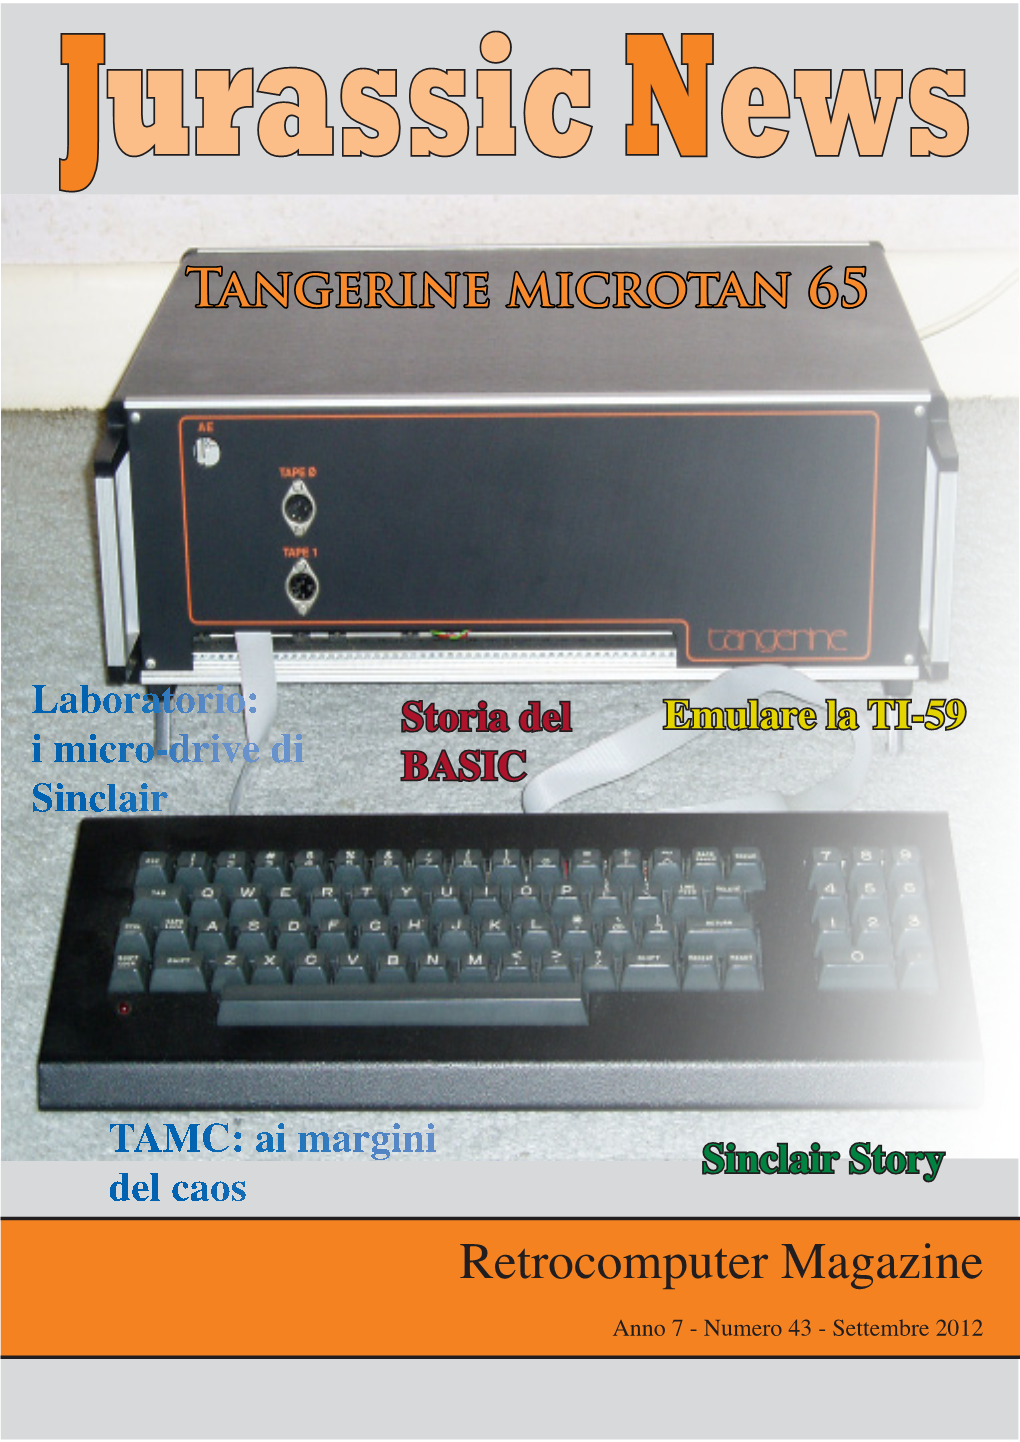 Retrocomputer Magazine Tangerine Microtan 65